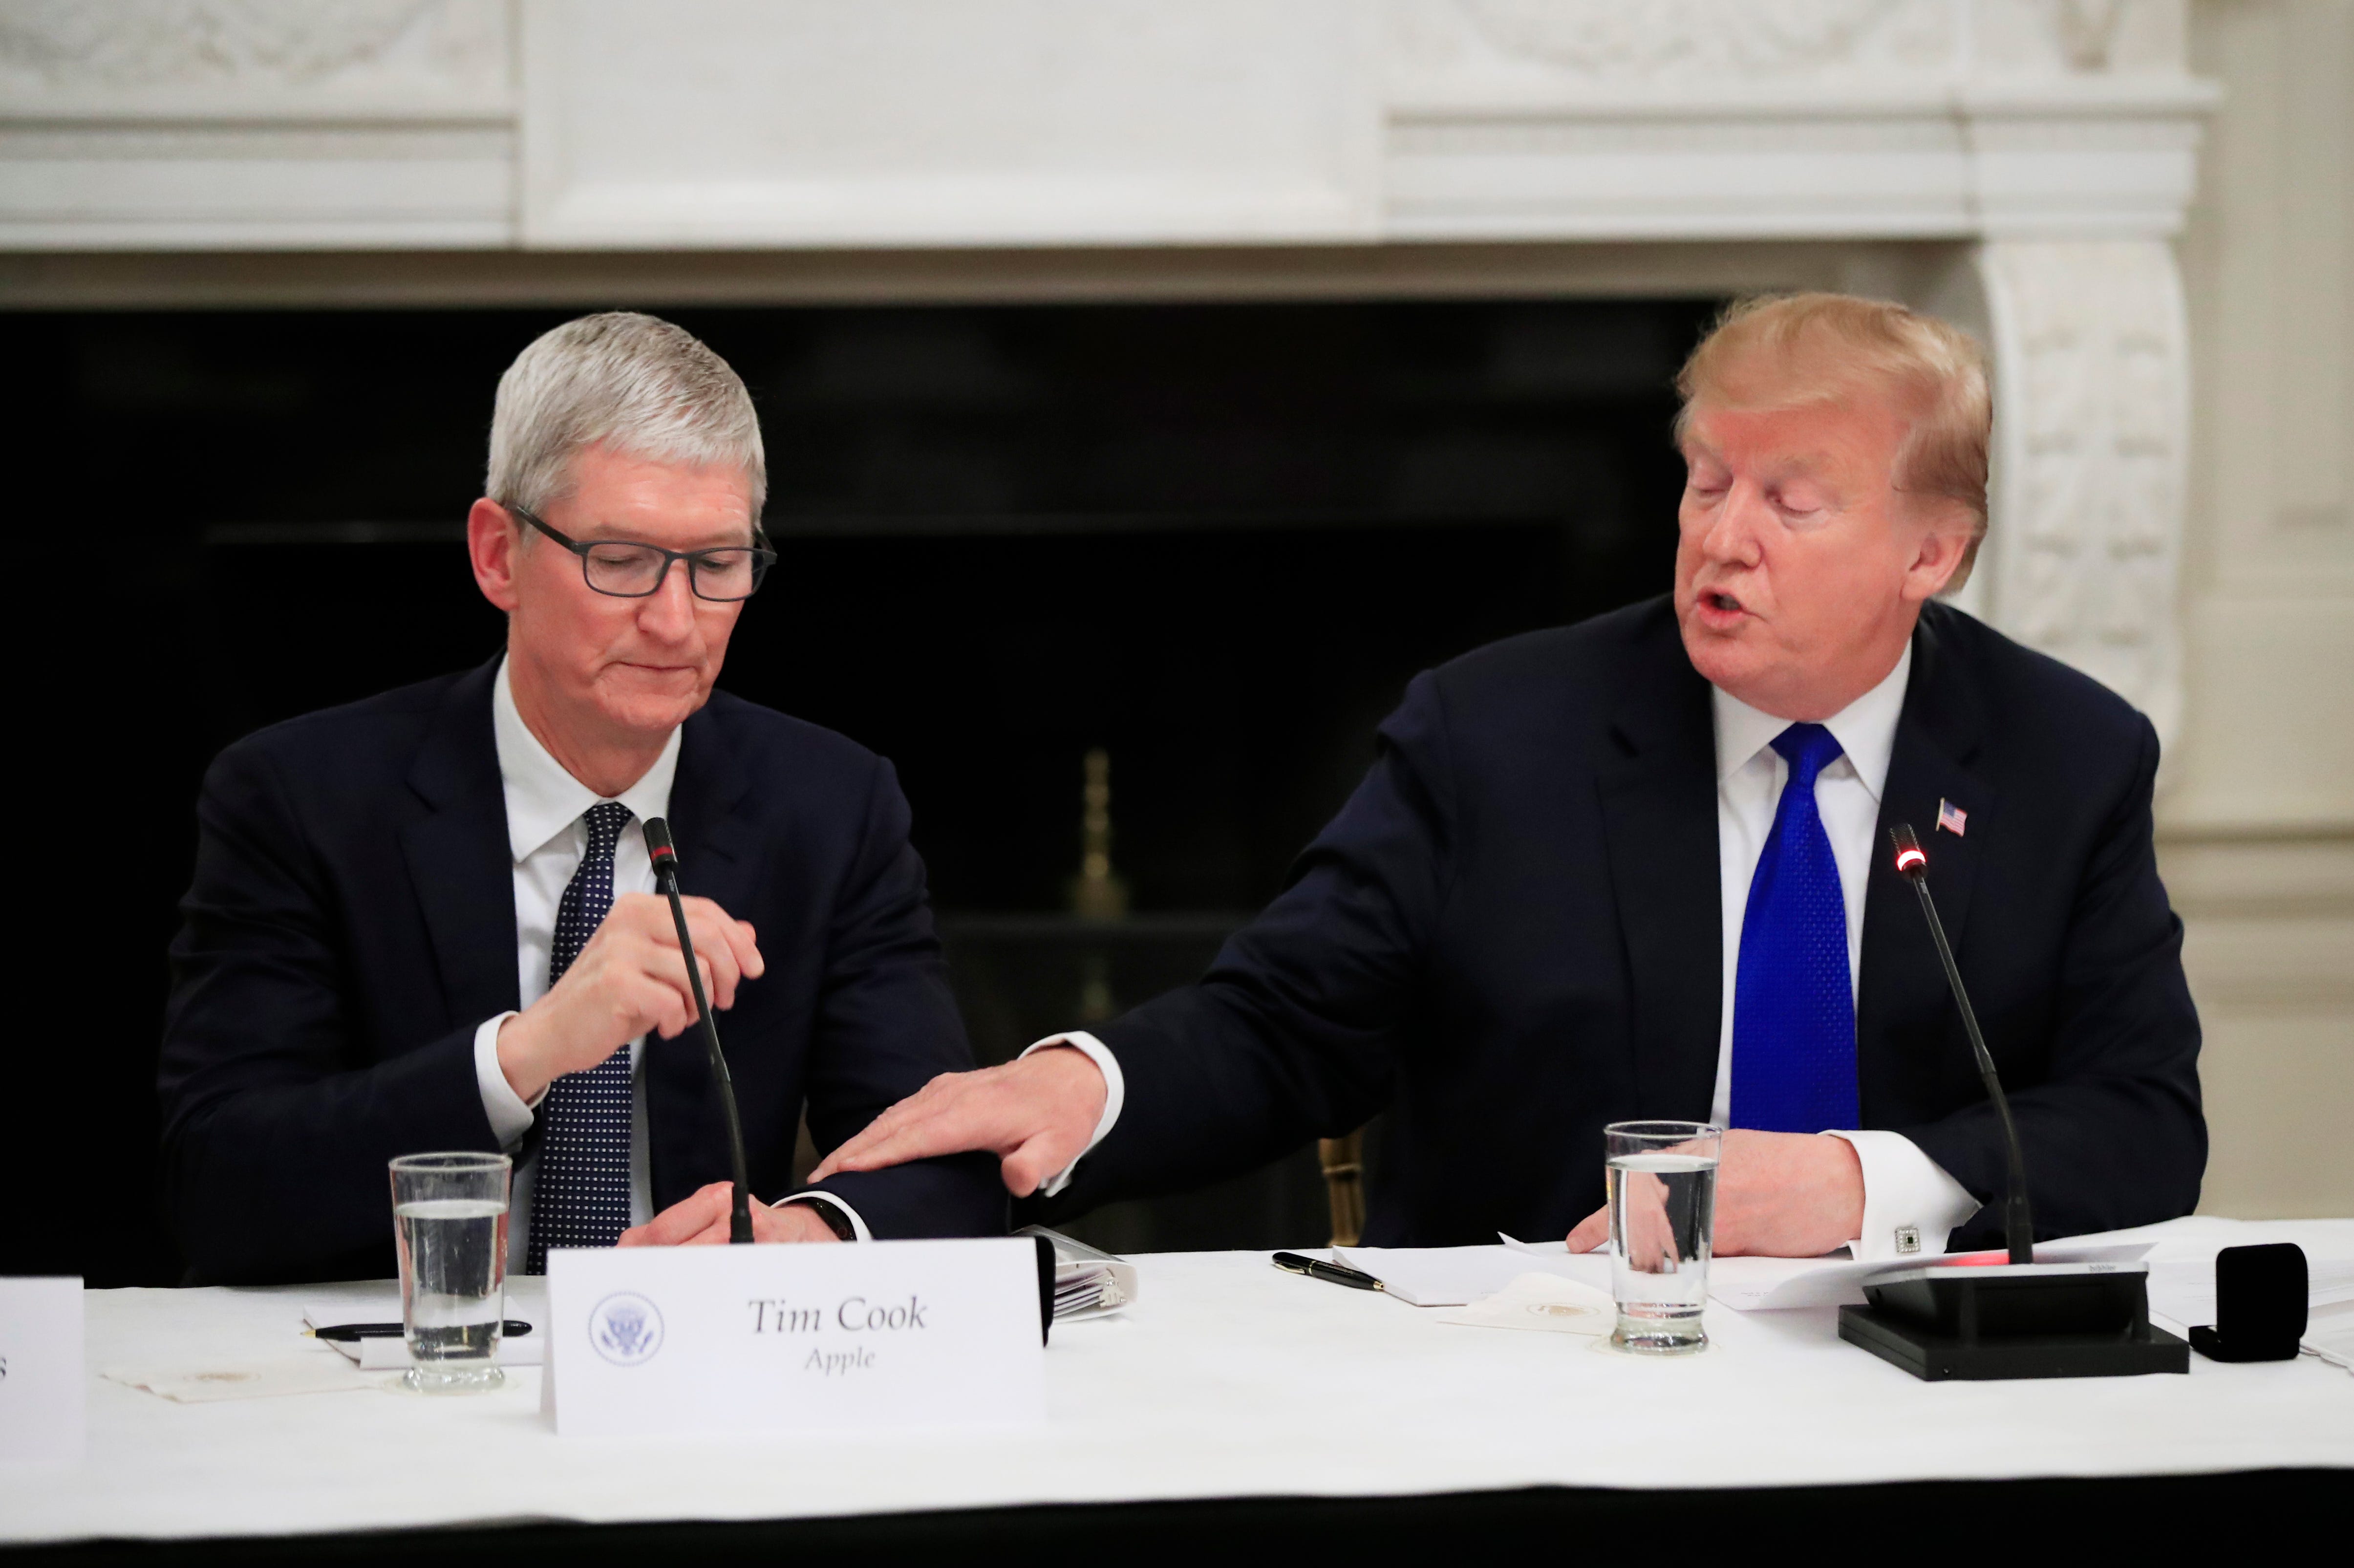 President Trump announces dinner plans with Apple CEO